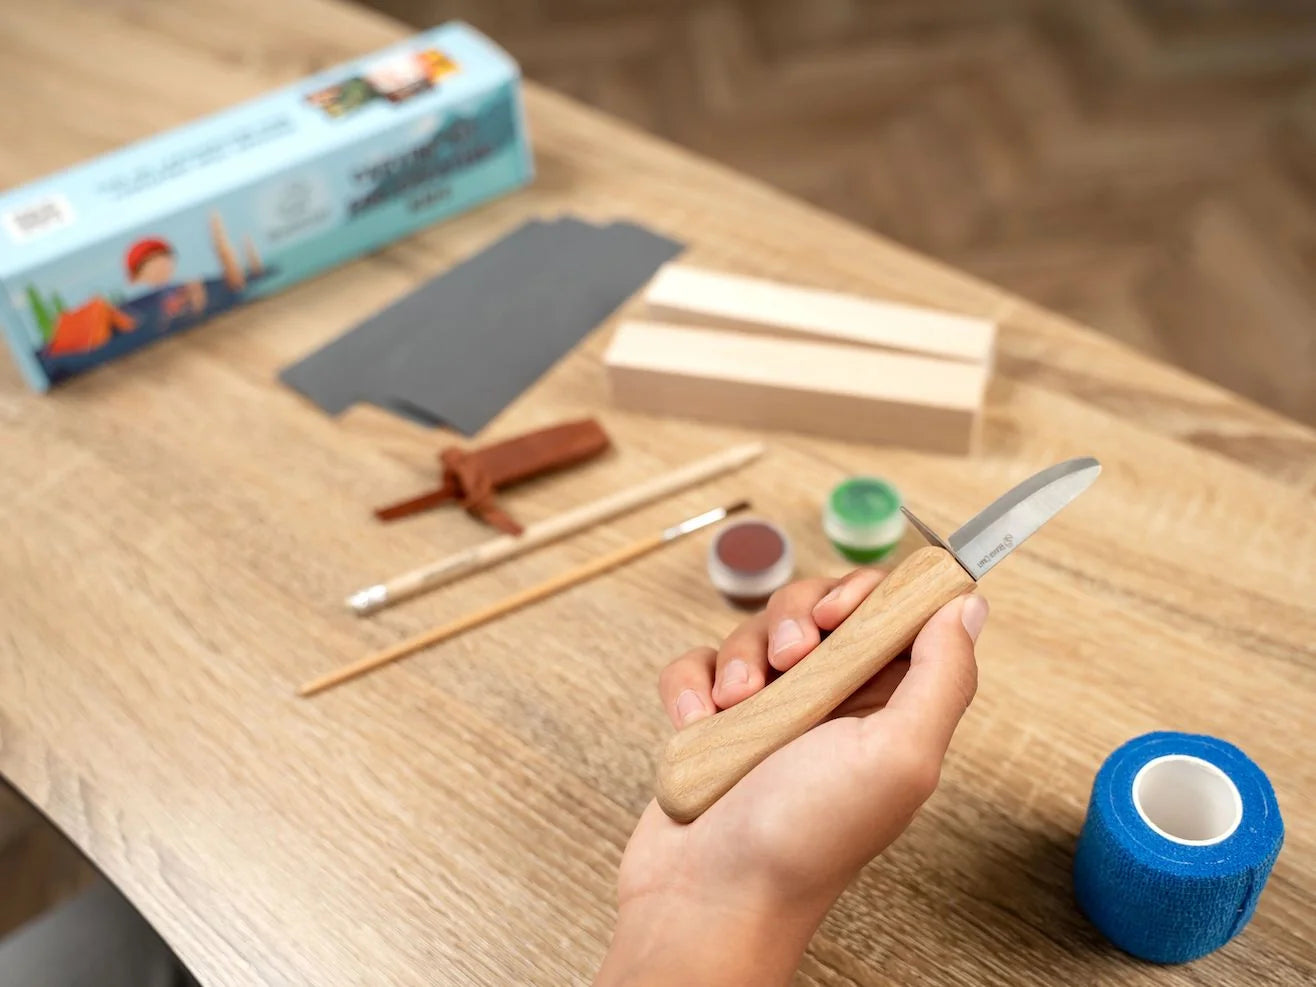 Whittling kit for kids, beginners, basics, projects. Bird carving supplies  – BeaverCraft Tools